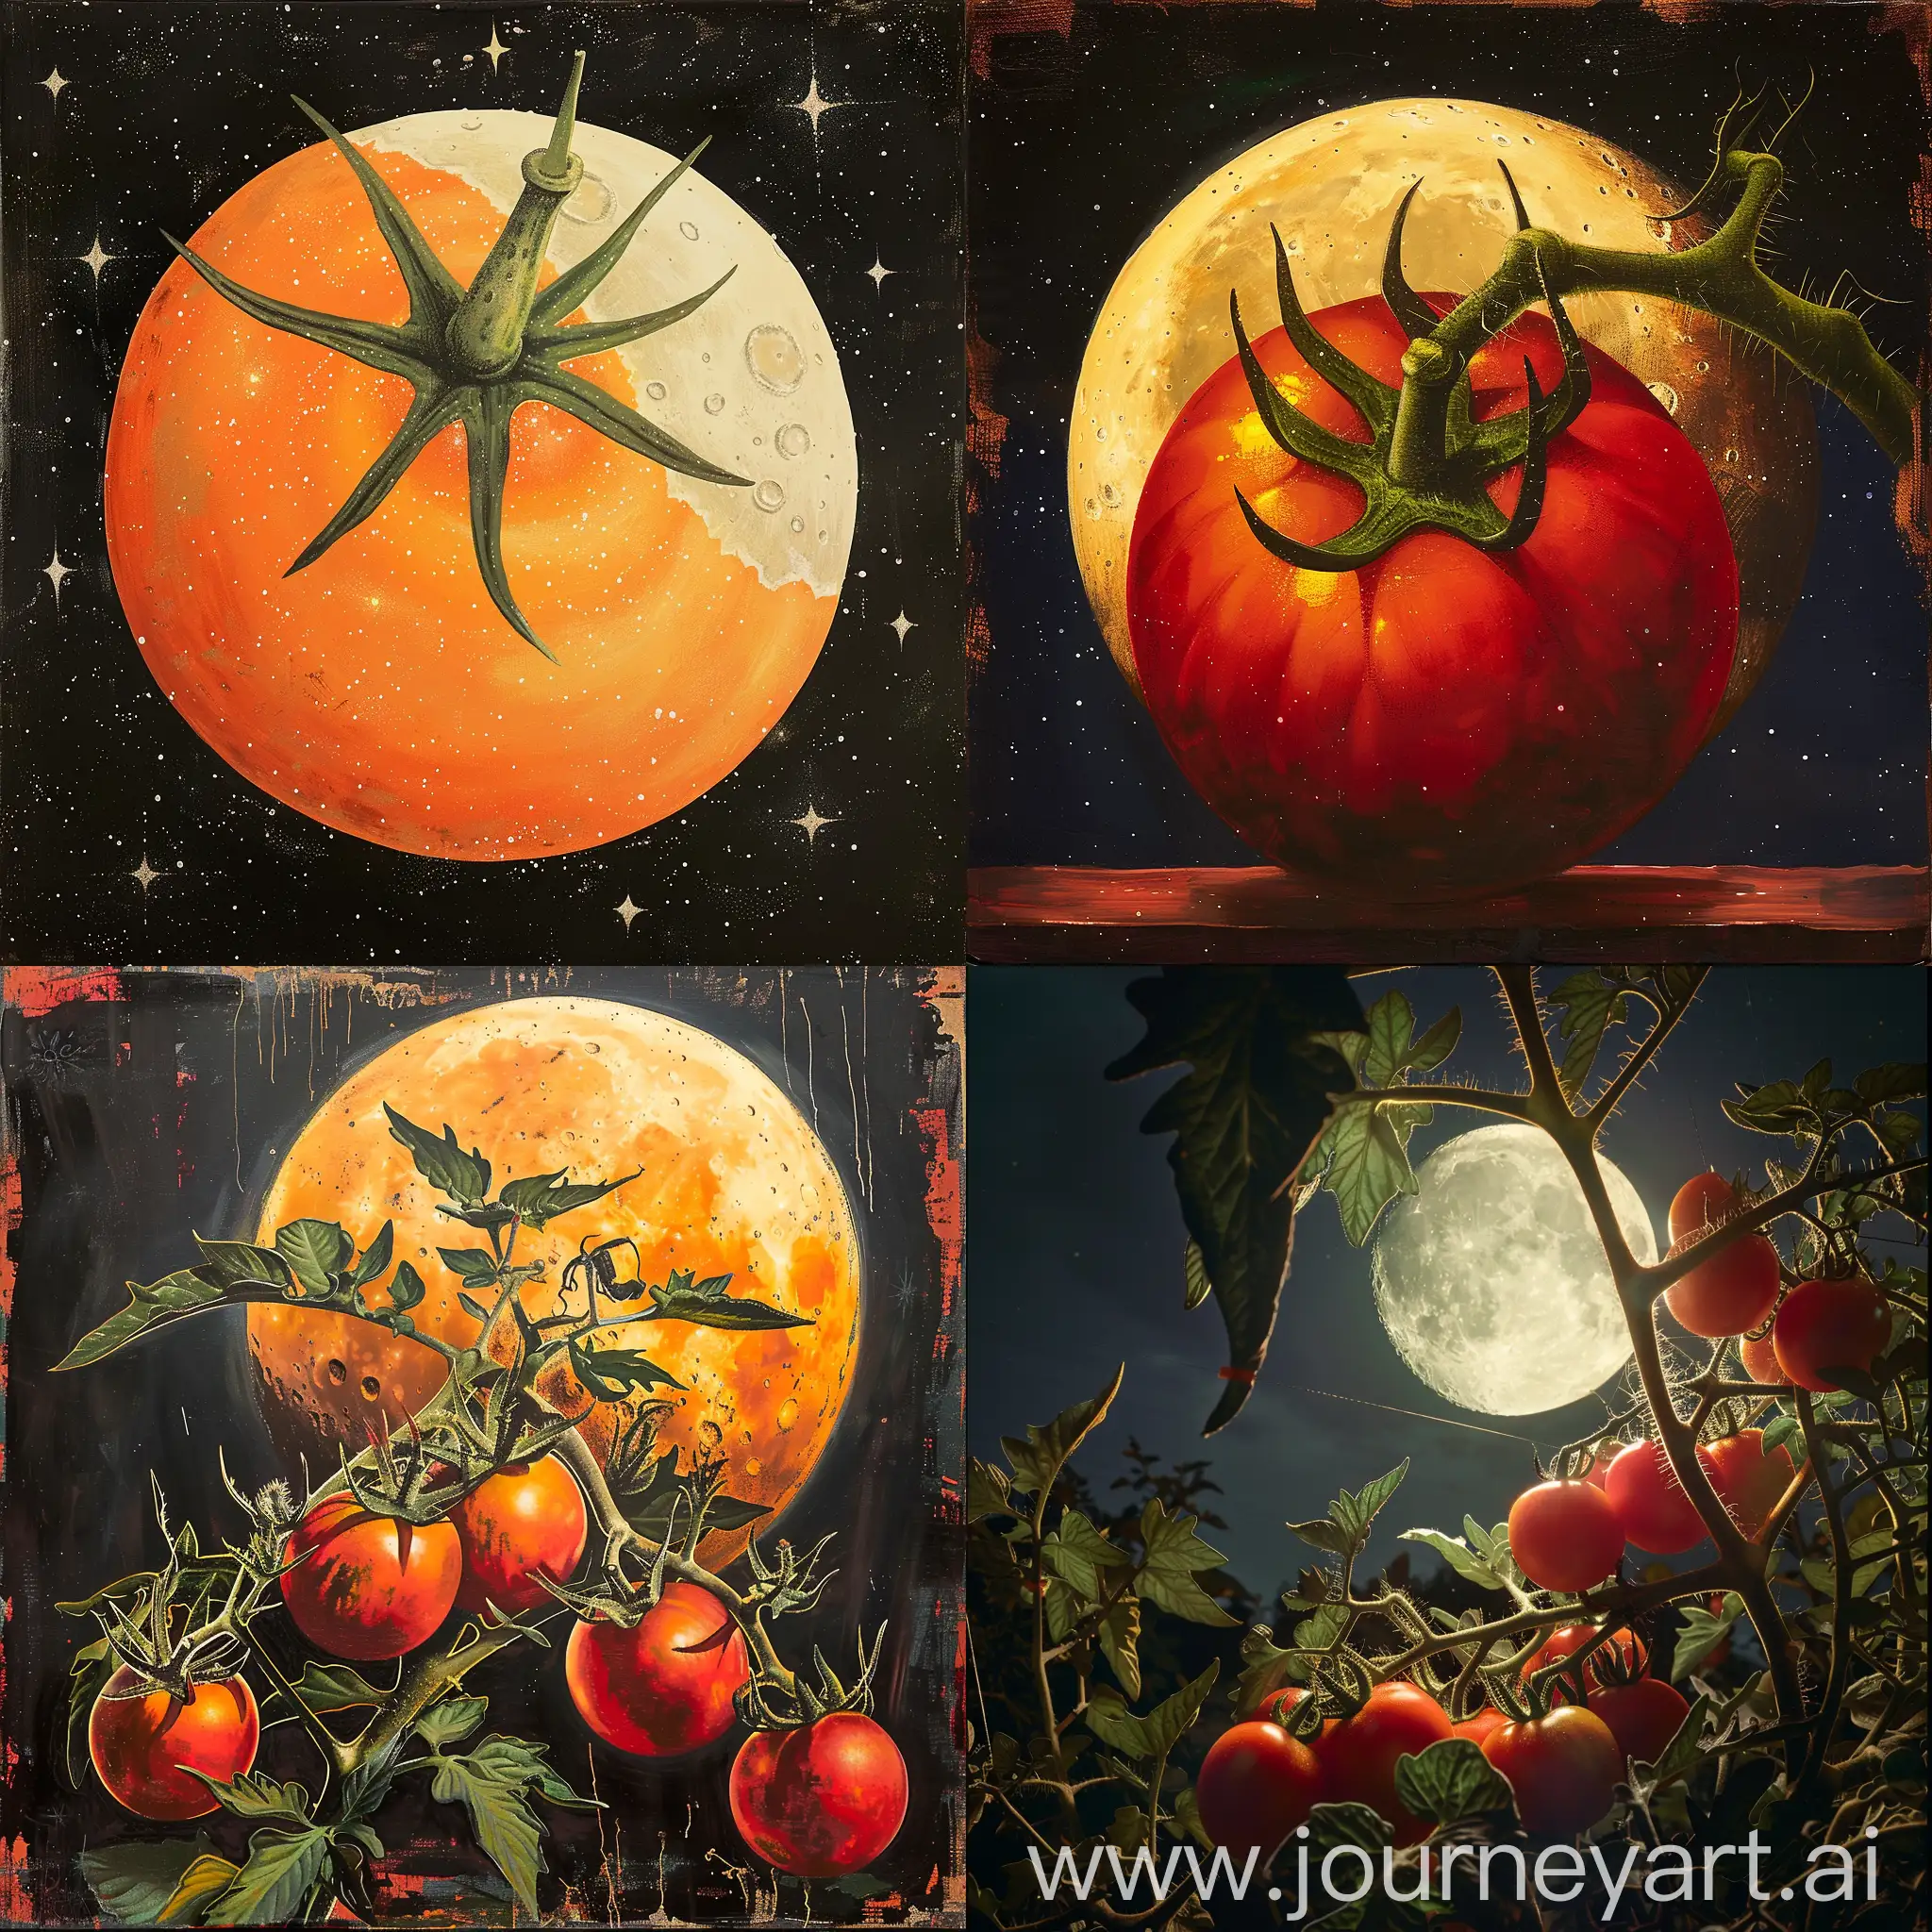 Tomato-Moon-in-Vivid-Artistic-Rendering